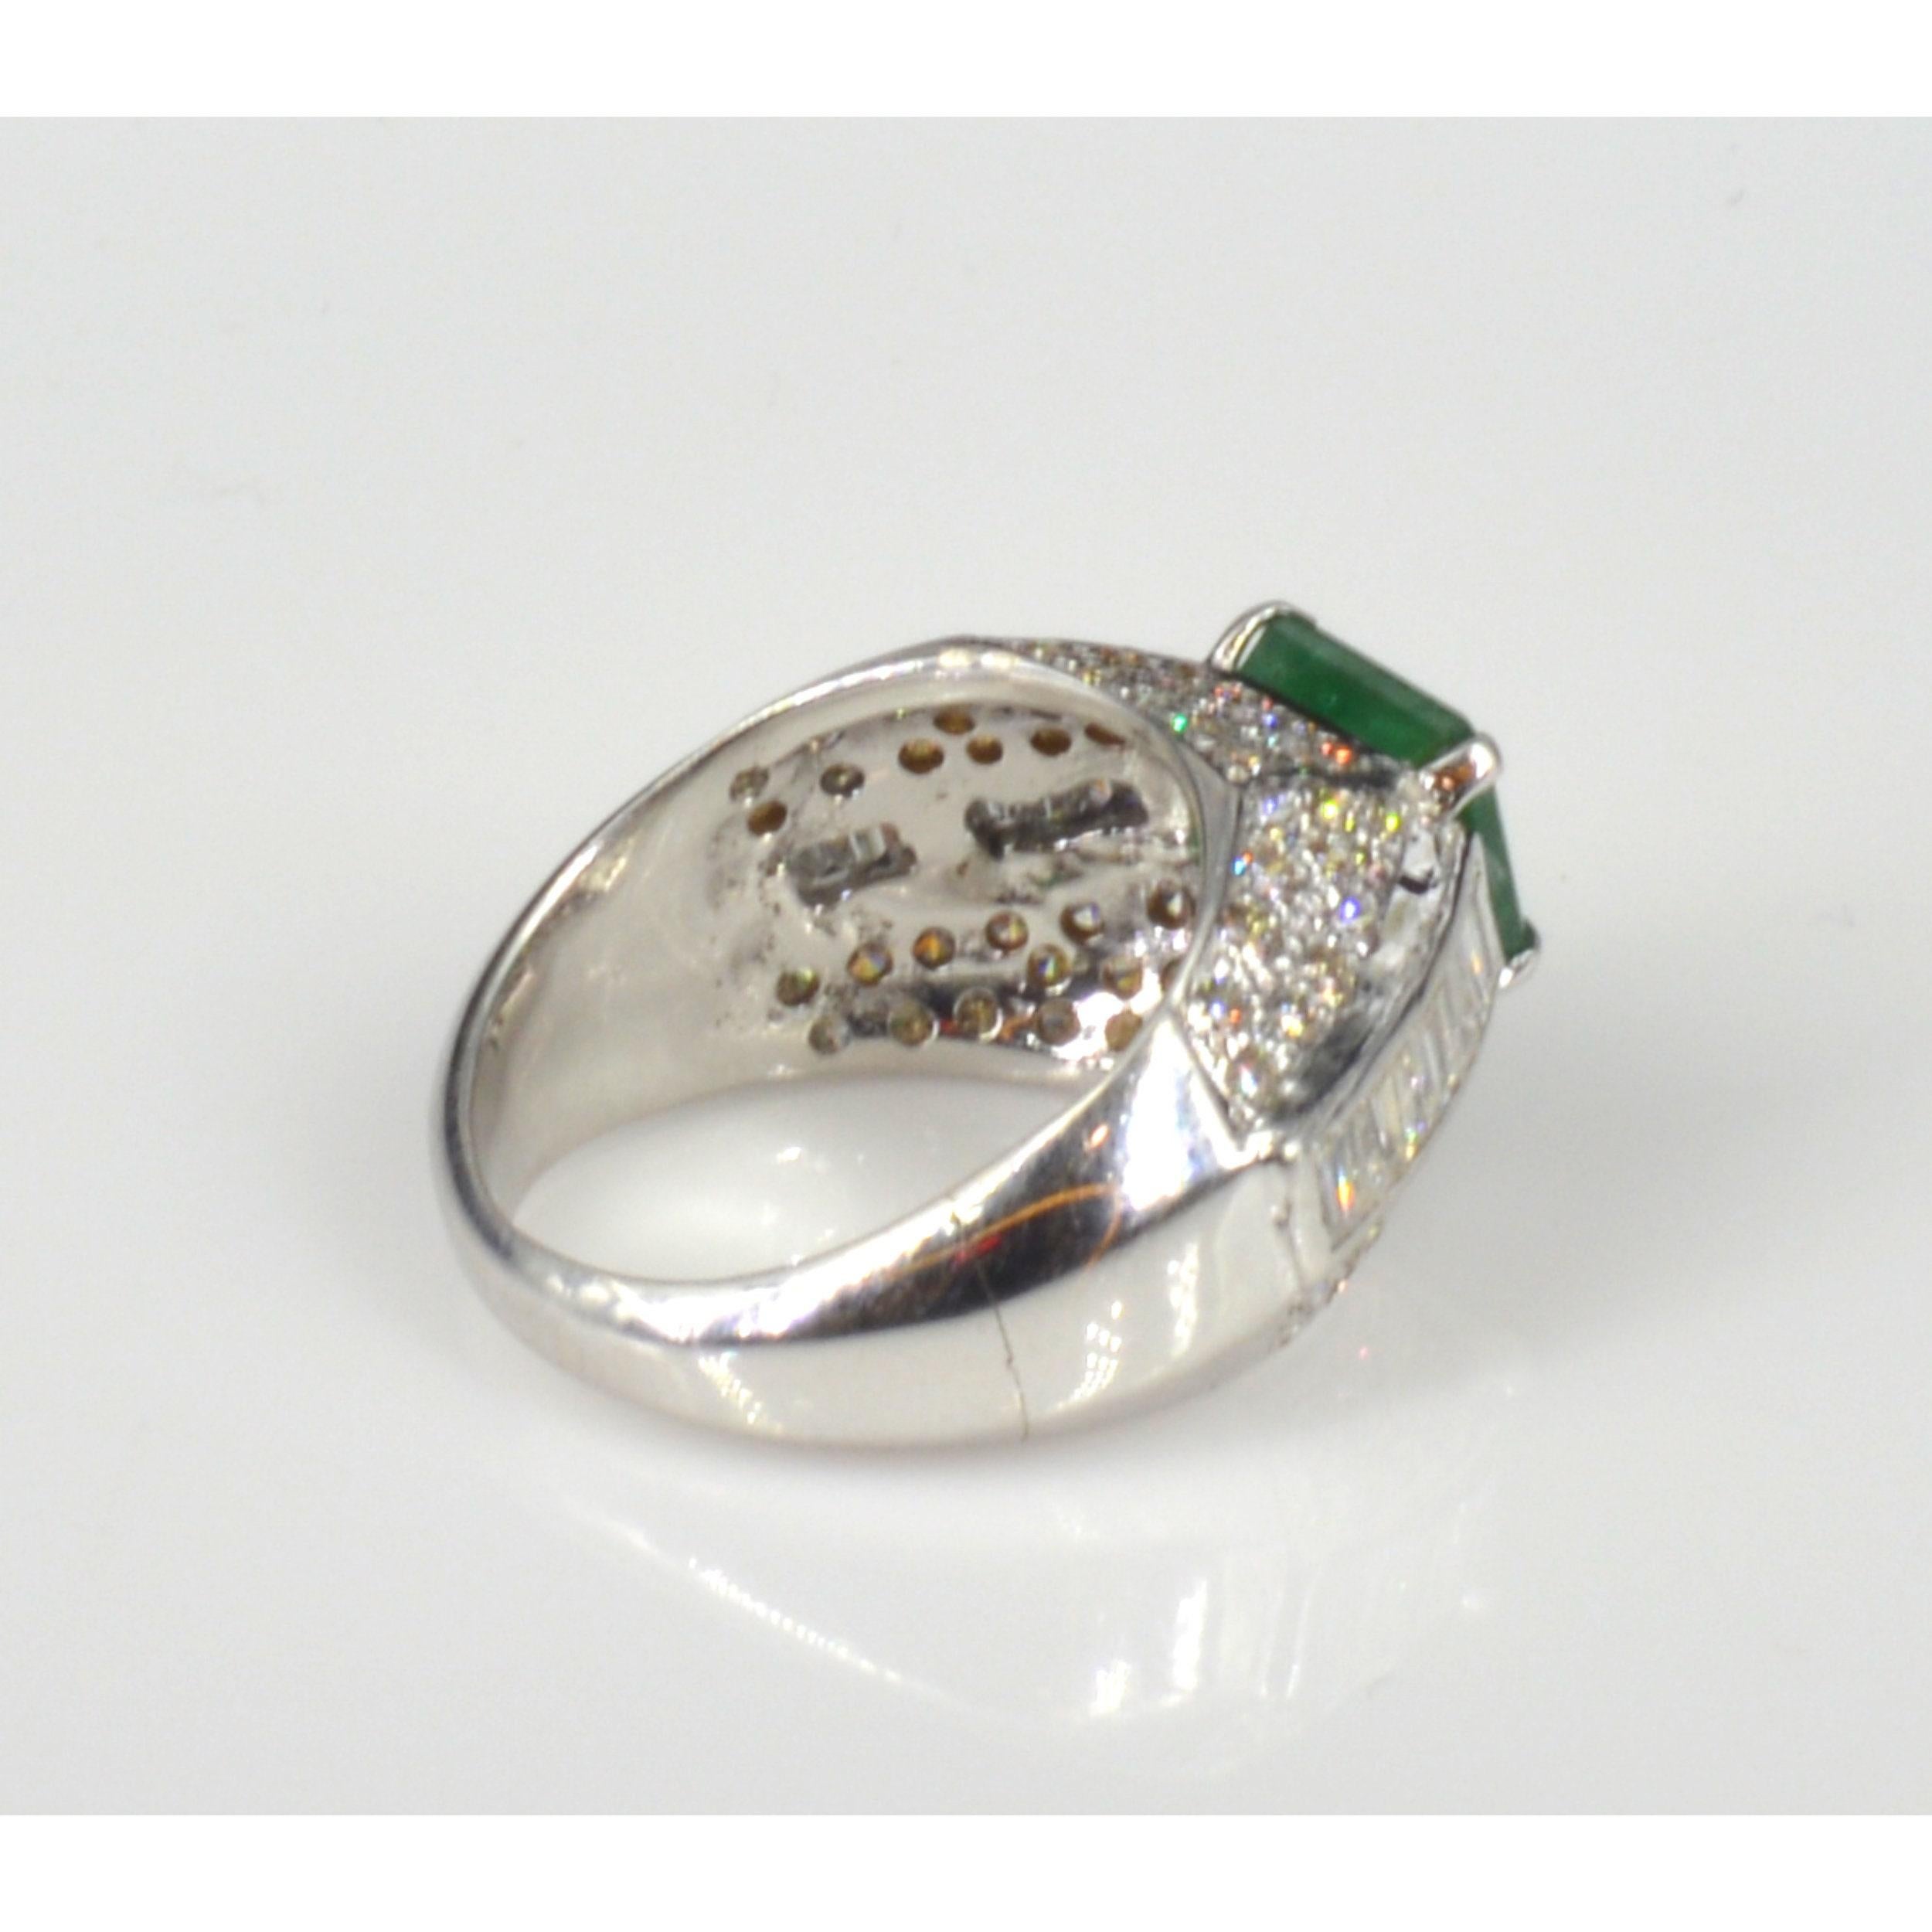 For Sale:  Antique 3 Carat Emerald Diamond Engagement Ring, Art Deco Diamond Wedding Ring 3